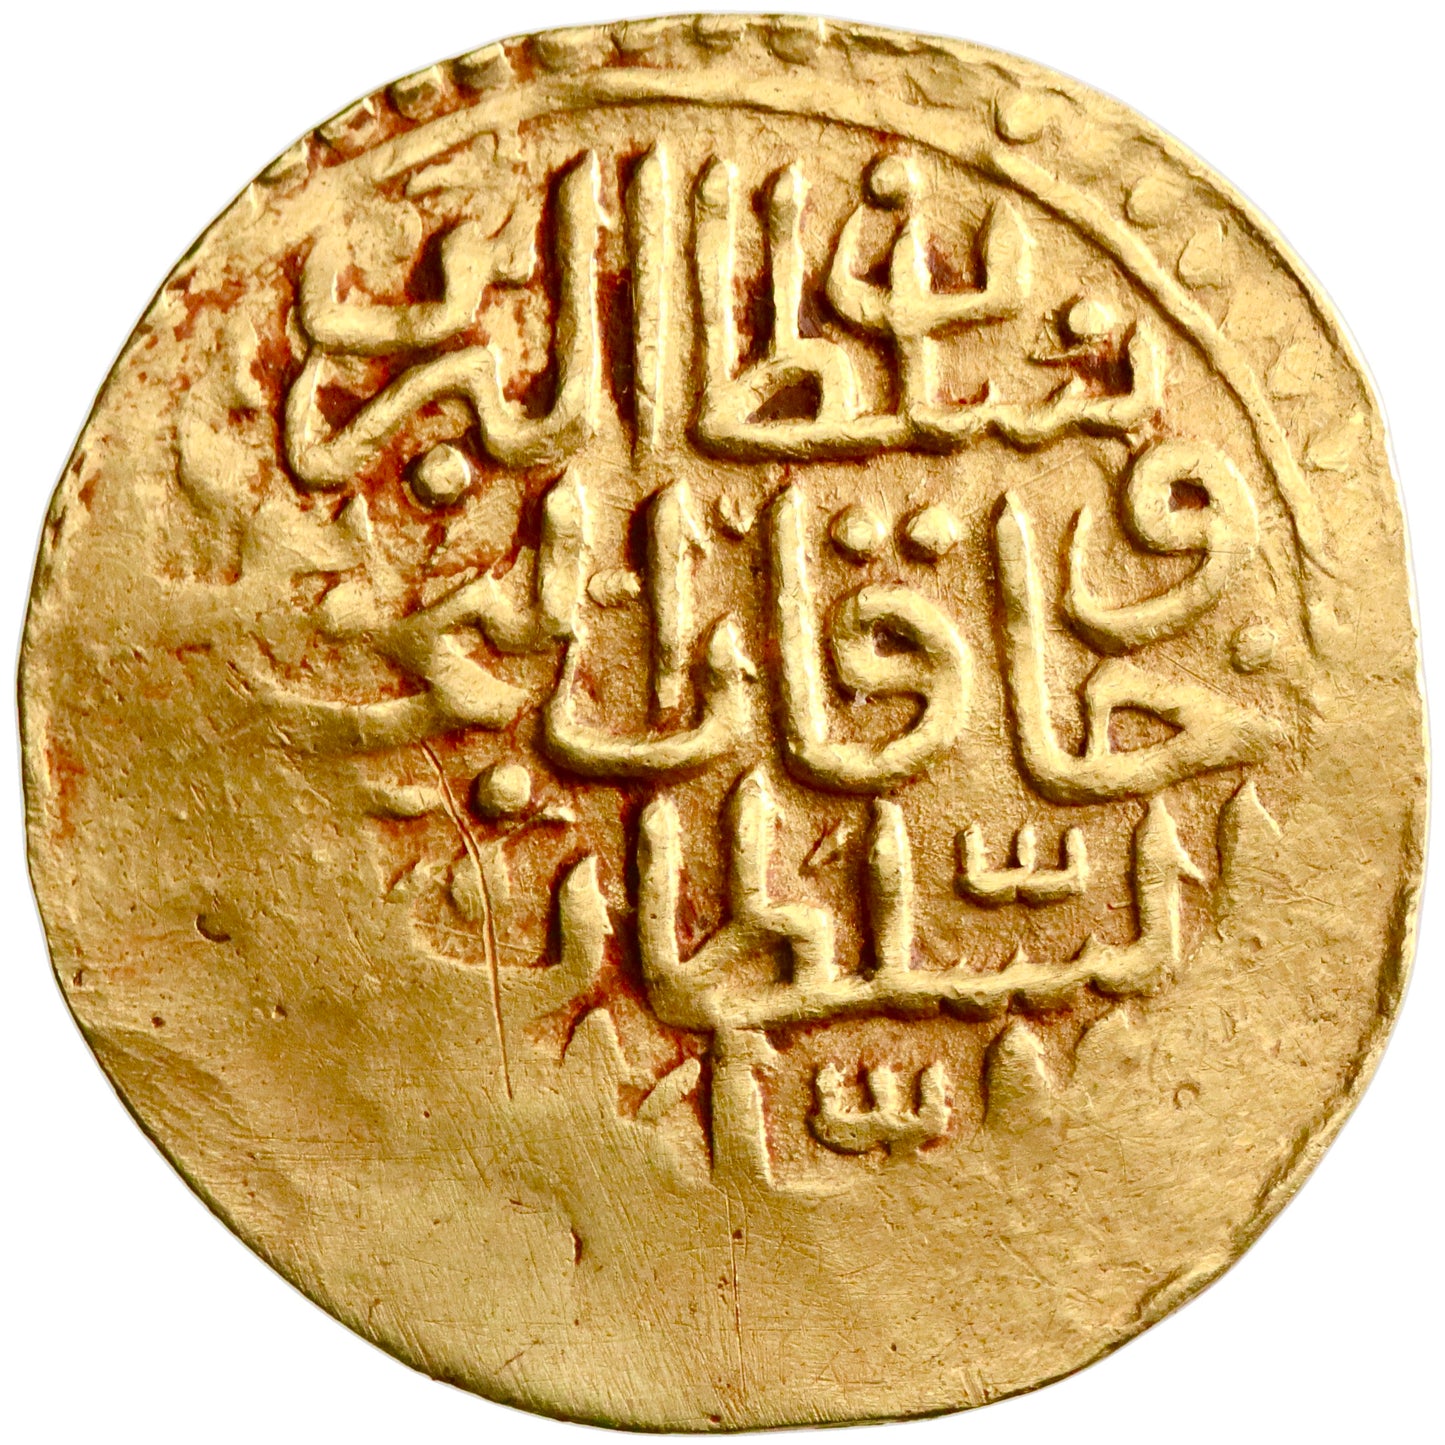 Ottoman, Ahmed I, gold sultani, Dimashq (Damascus) mint, AH 1012